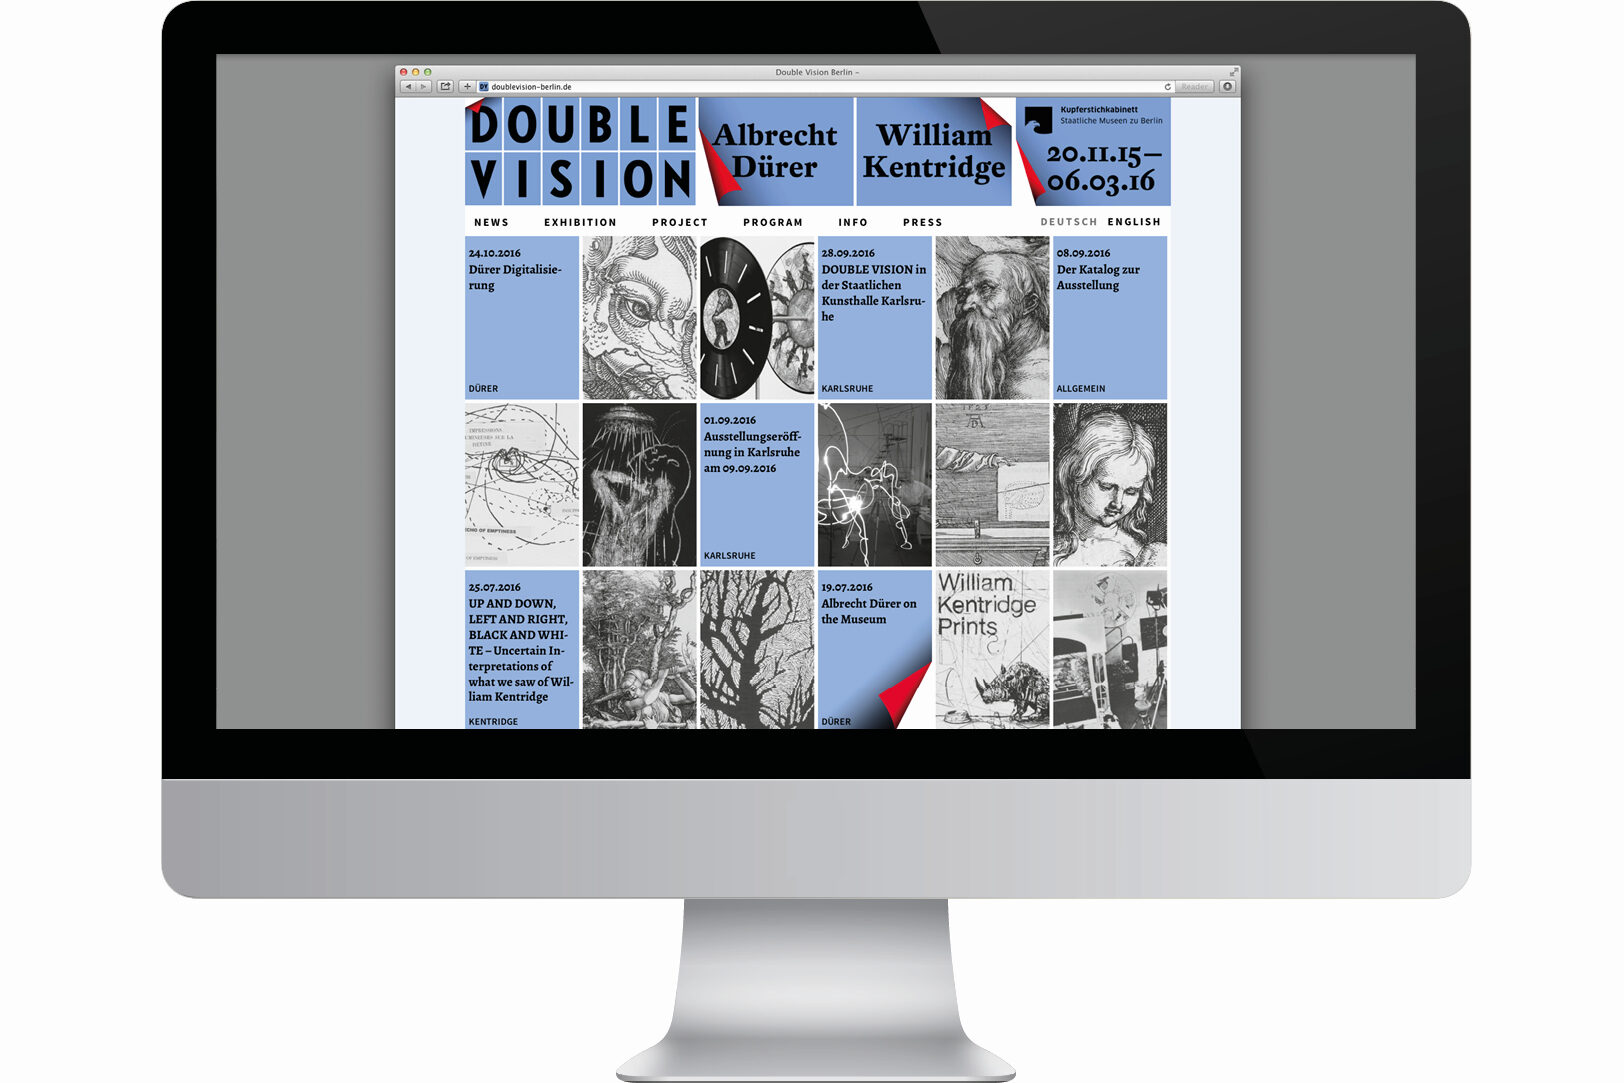 https://e-o-t.de/wordpress/wp-content/uploads/2015/11/Eot-Double-Vision-Web-1-1.jpg